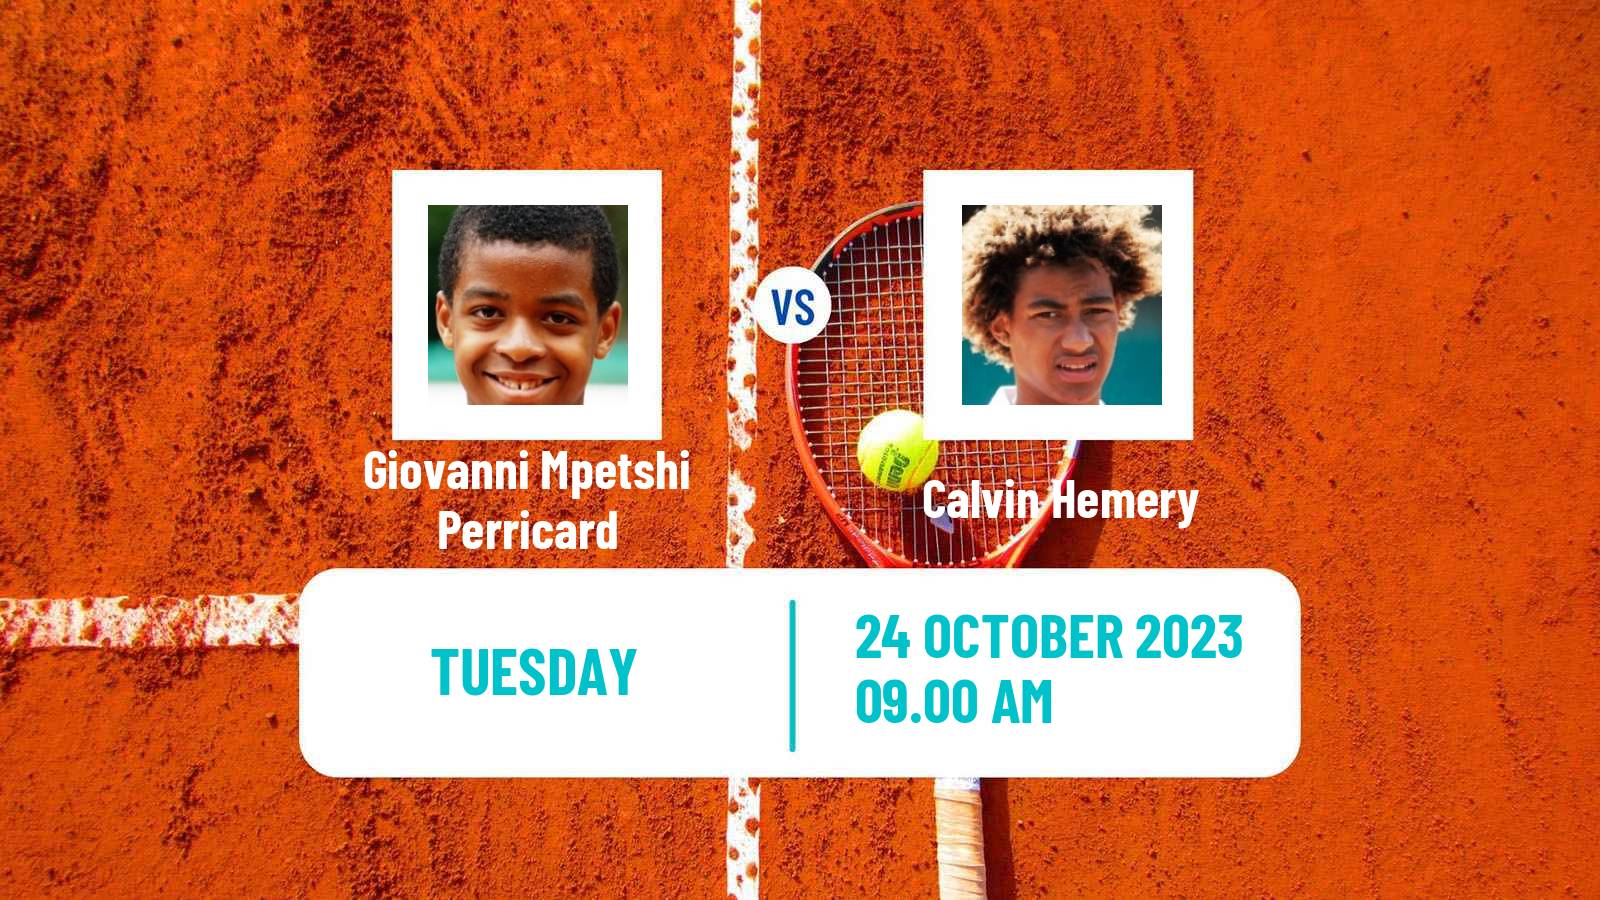 Tennis Brest Challenger Men Giovanni Mpetshi Perricard - Calvin Hemery